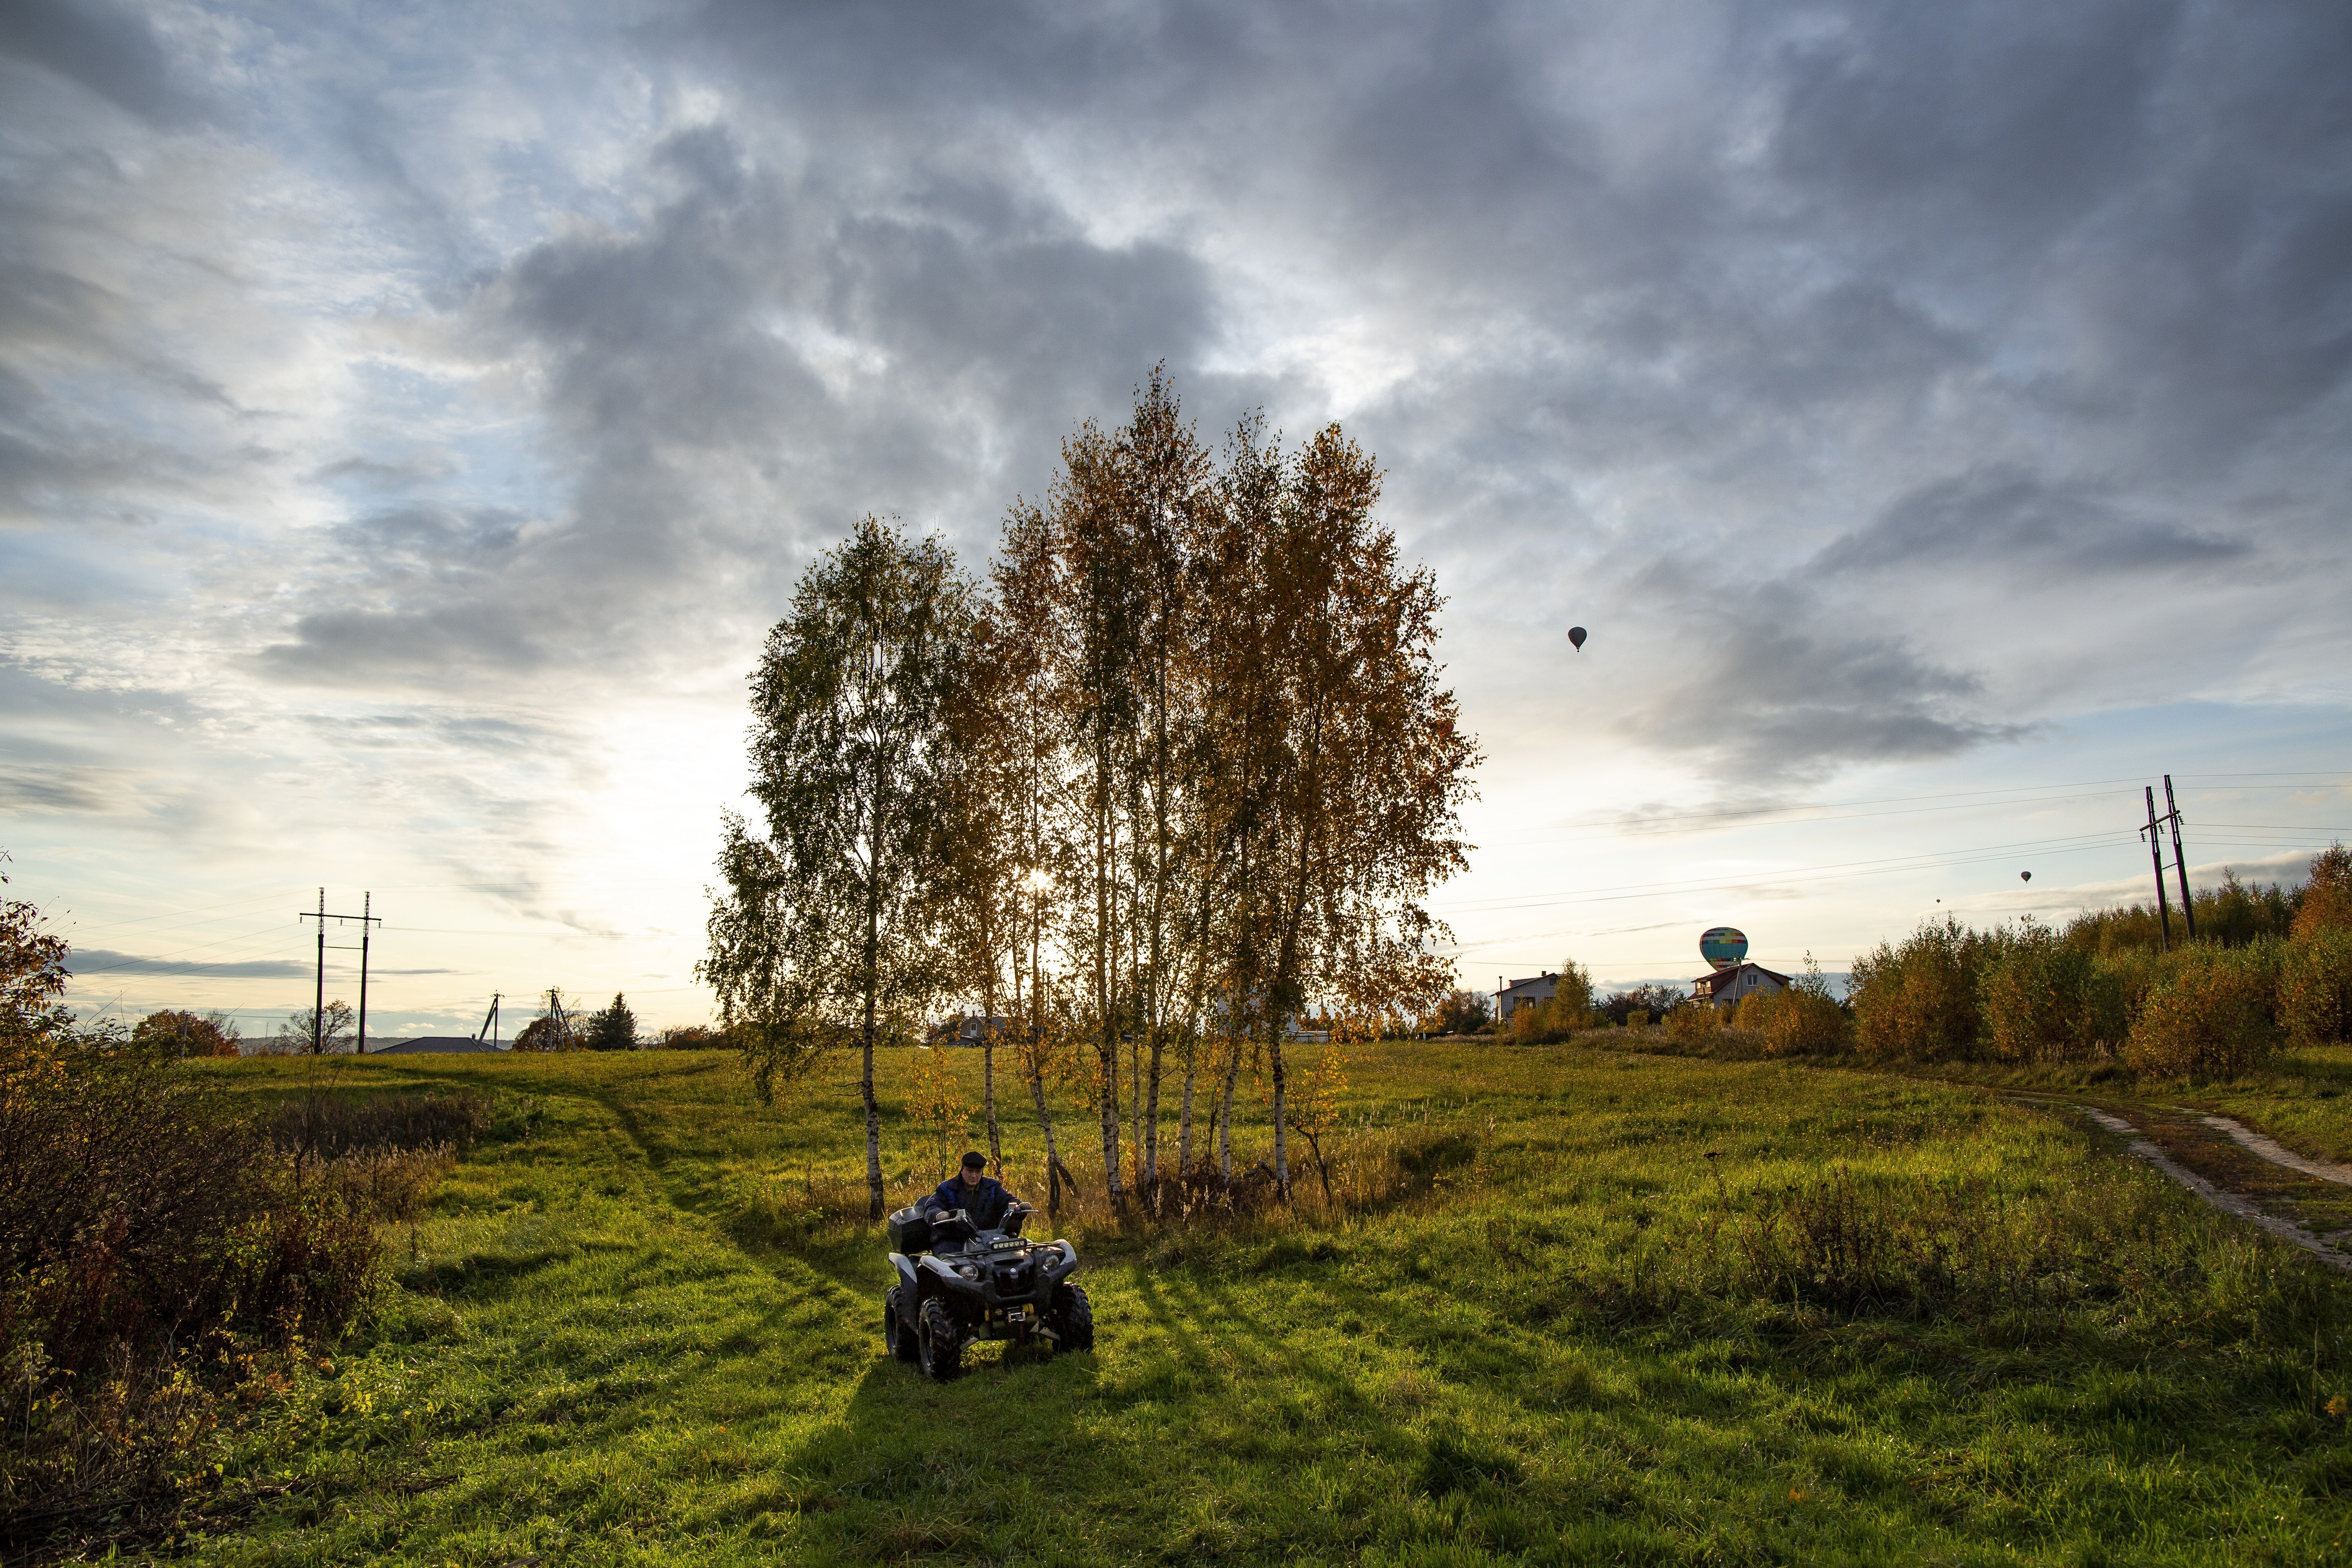 A man rides an all-terrain vehicle through an autumn field during sunset near Peremilovo village, 65 km (40,6 miles) north of Moscow, Russia, Saturday, Oct. 5, 2019. (AP Photo/Alexander Zemlianichenko)